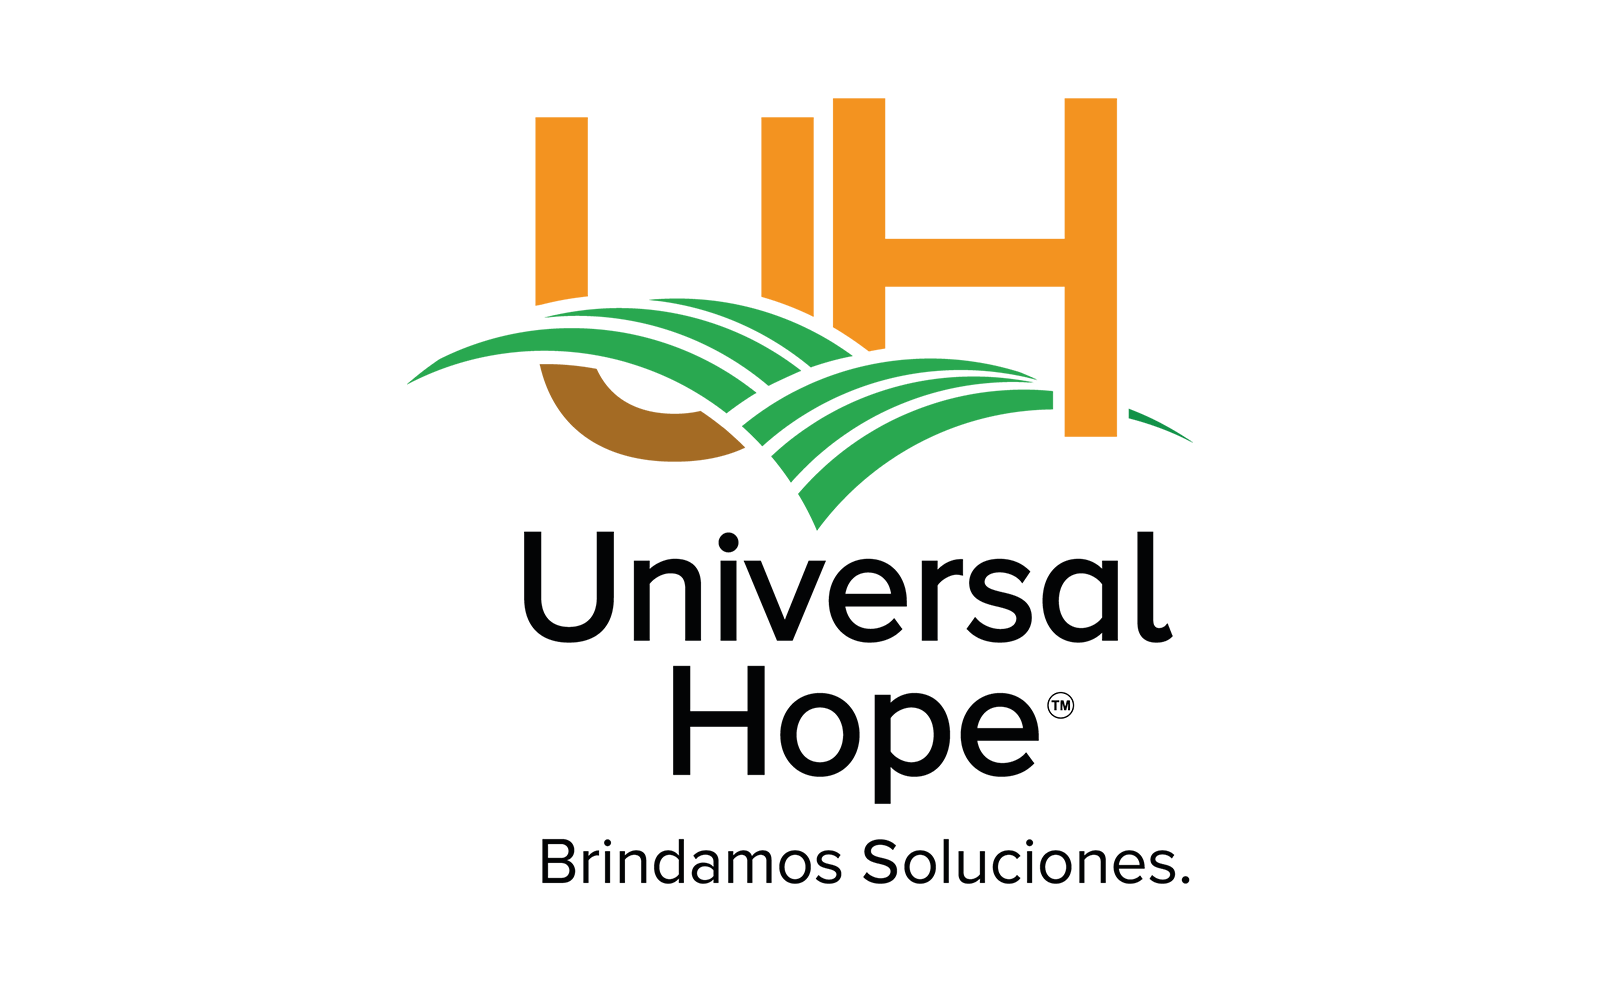 Universal Hope